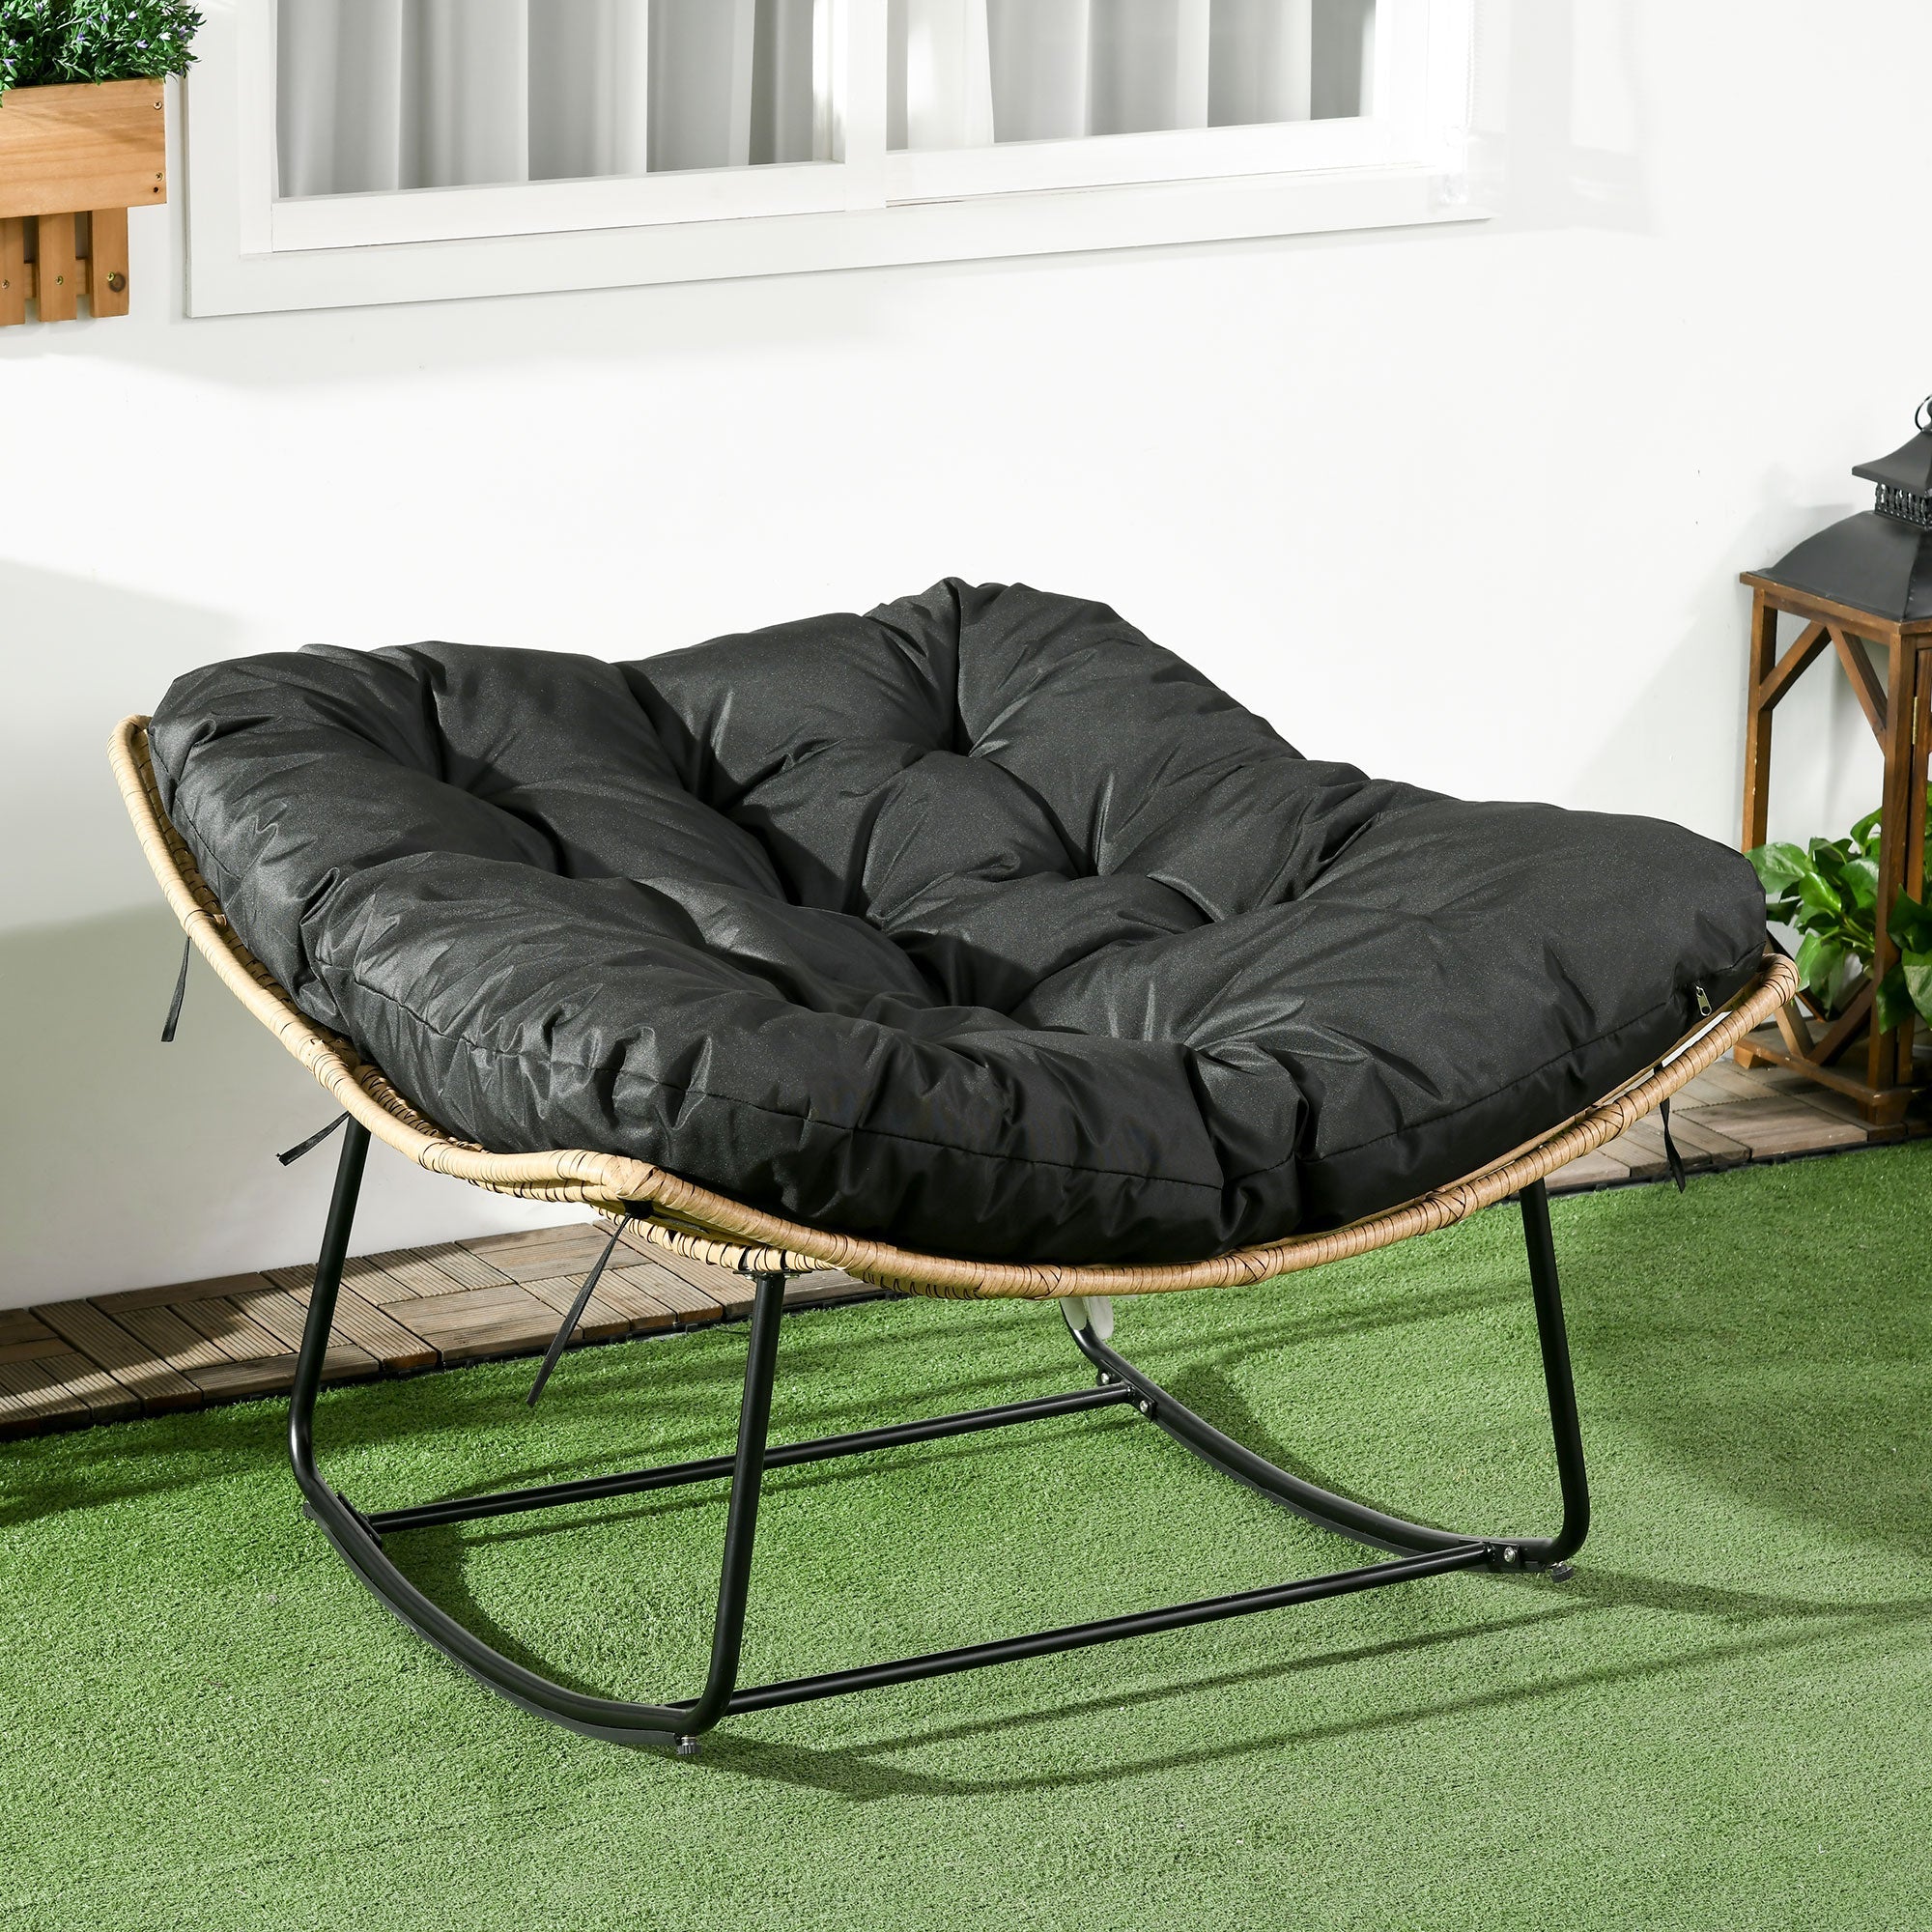 Outdoor PE Rattan Rocking Chair, Patio Luxury Round Wicker Garden Porch Furniture w/ Thick Cushion, Natural Wood Finish-1